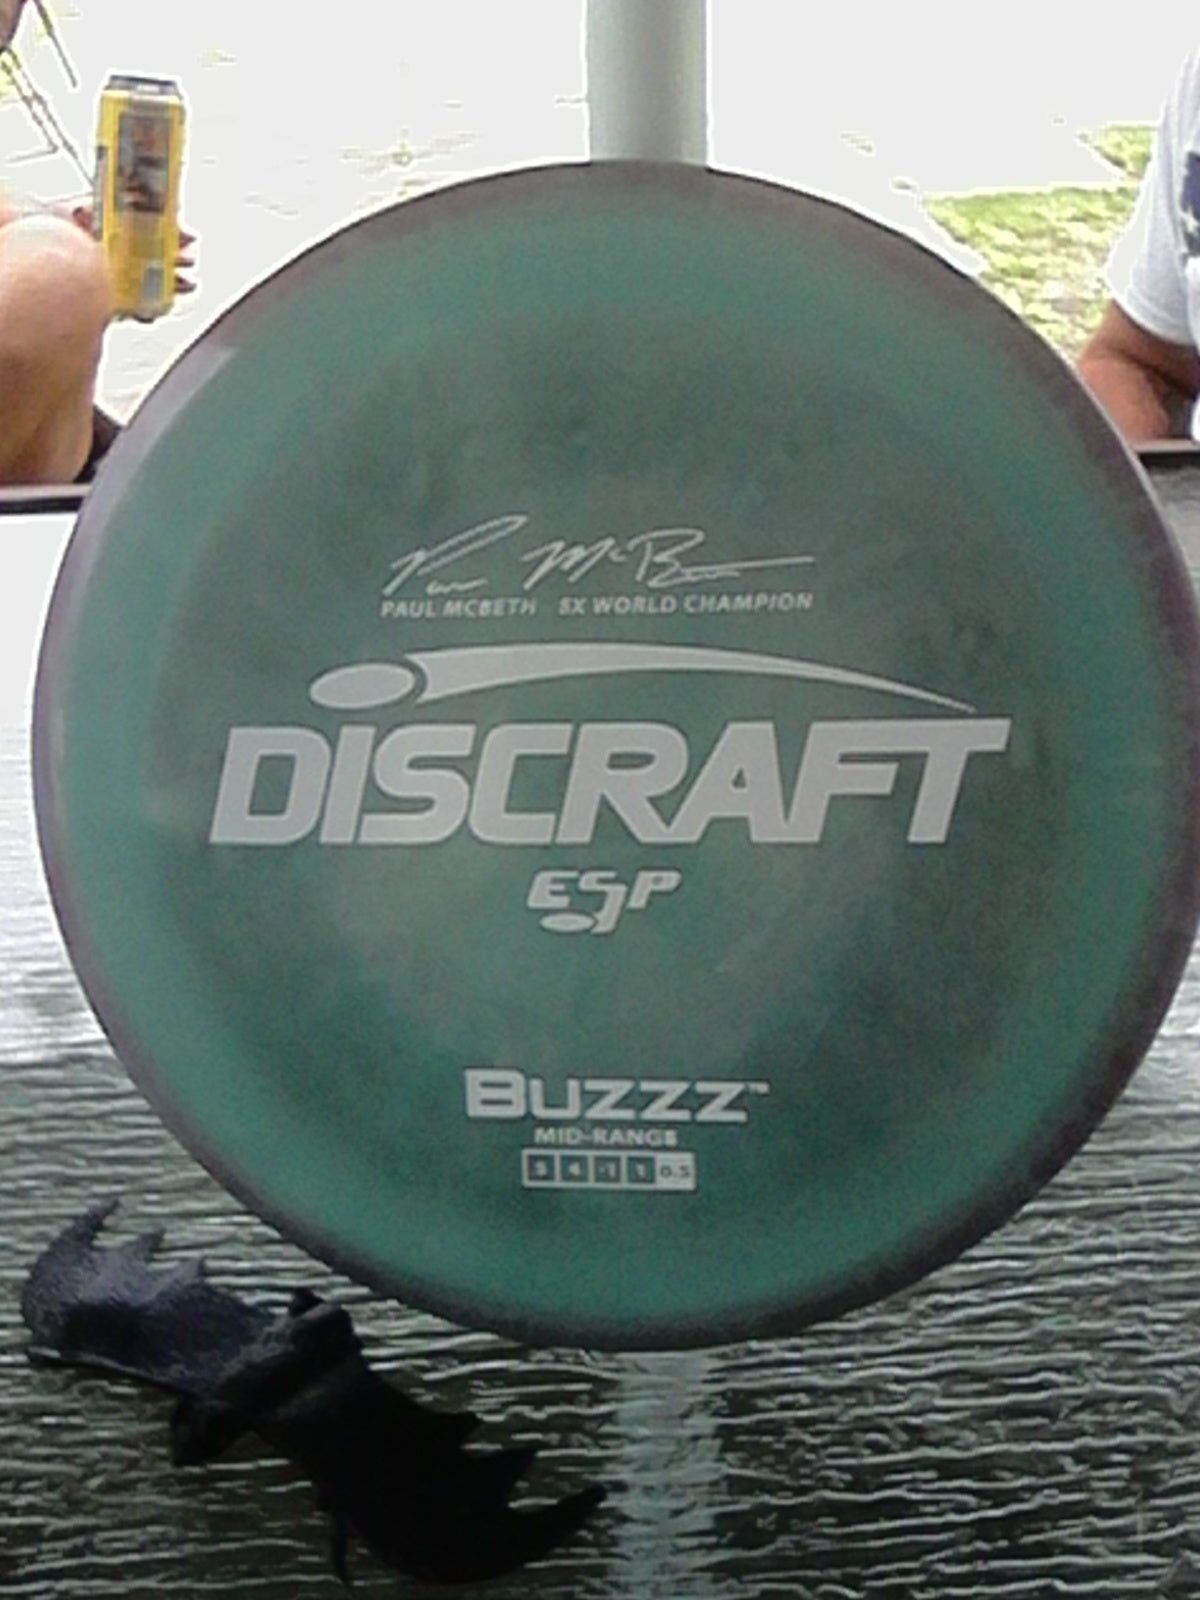 Discraft ESP Paul McBeth 5X World Champion Buzzz 175-176 Grams (3).